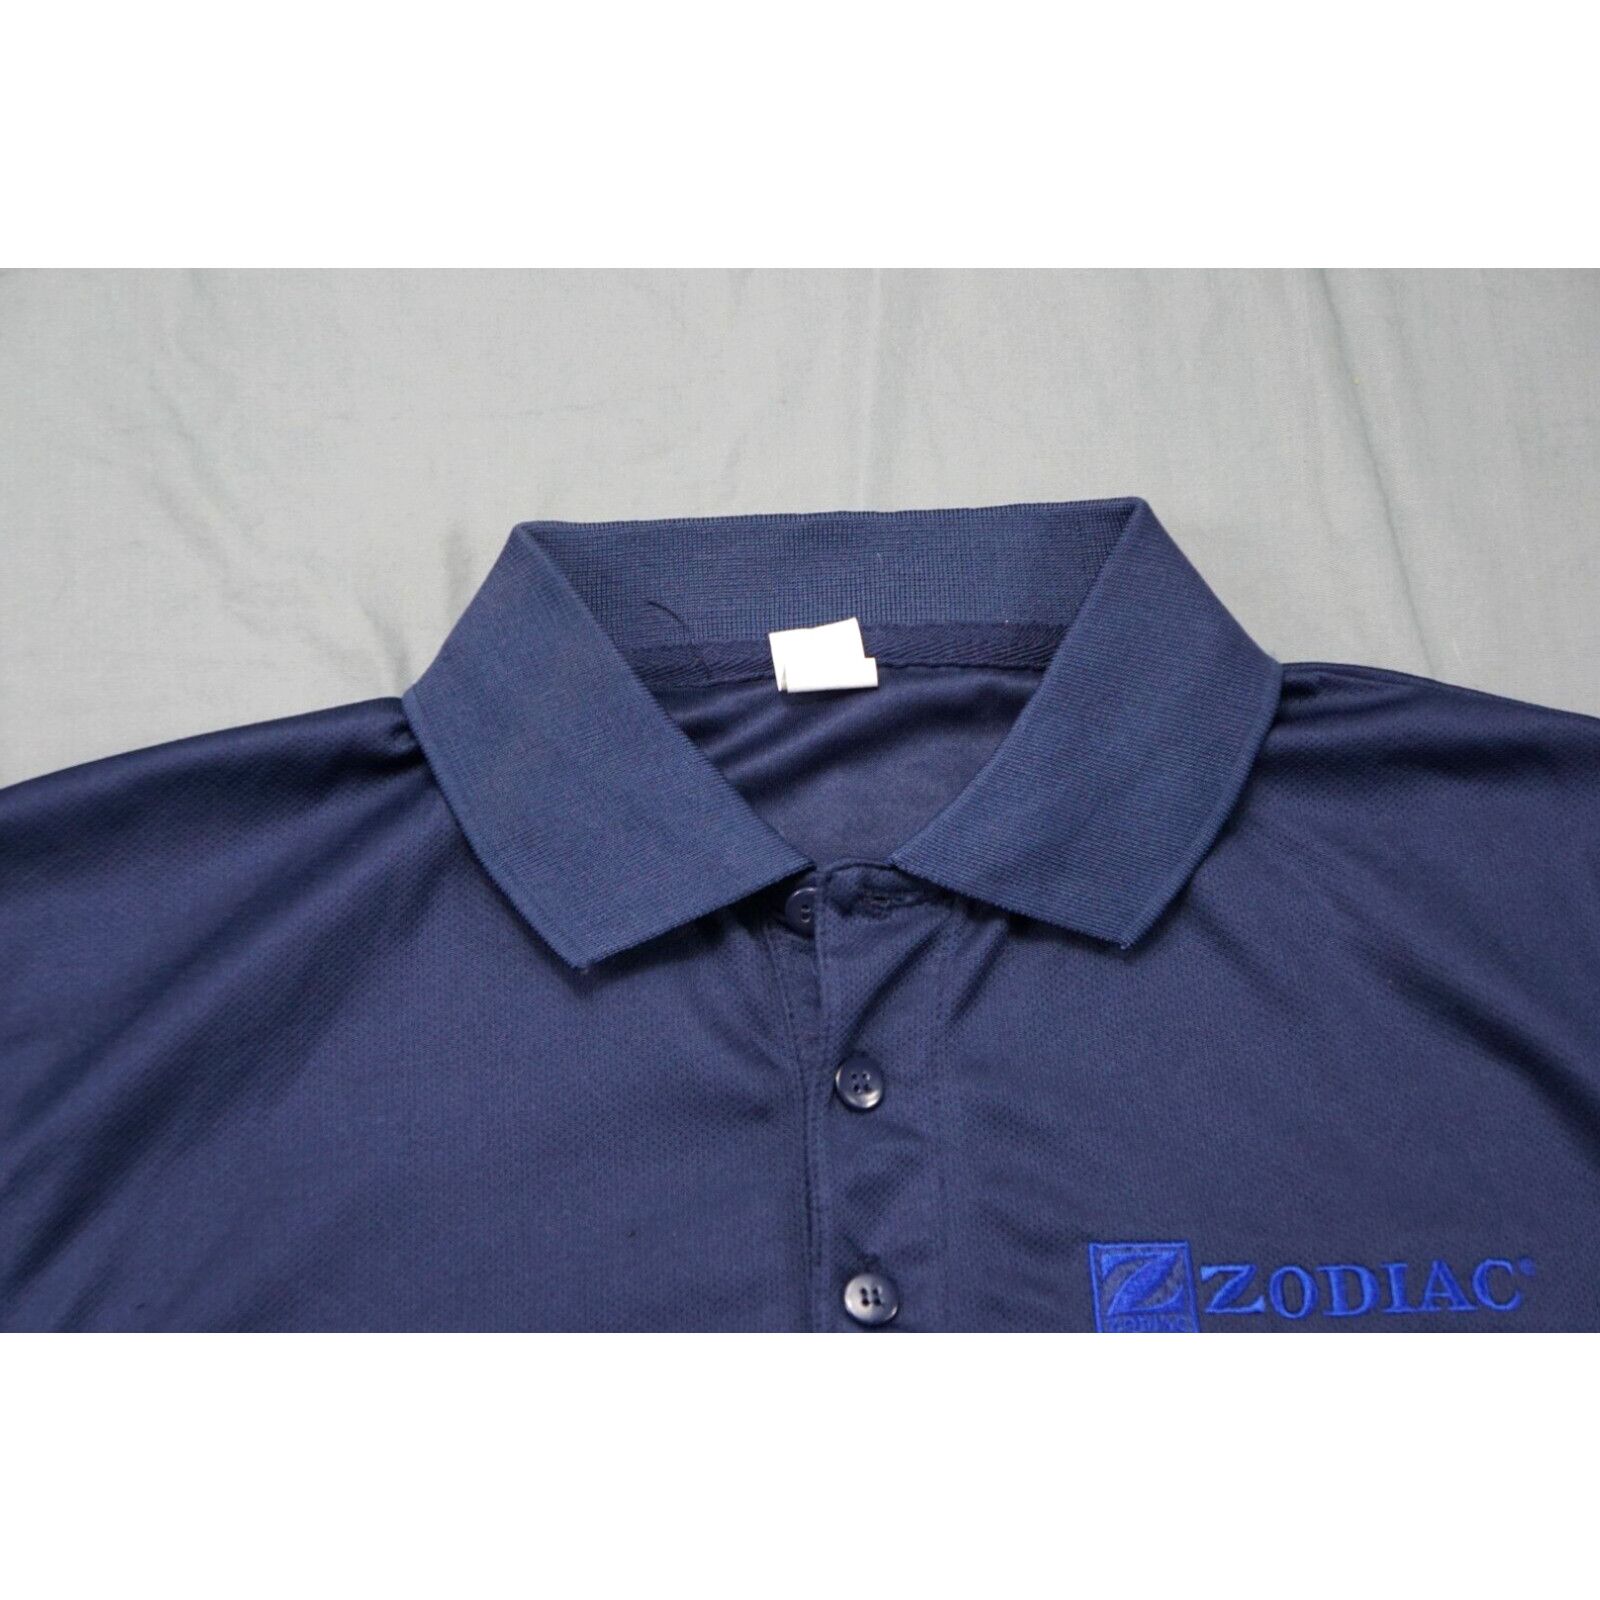 Dunbrooke Dunbrooke Premium Polo Golf Shirt. Zodiac Stitched. Navy Blue, Men's S. EUC!! Size US S / EU 44-46 / 1 - 3 Thumbnail